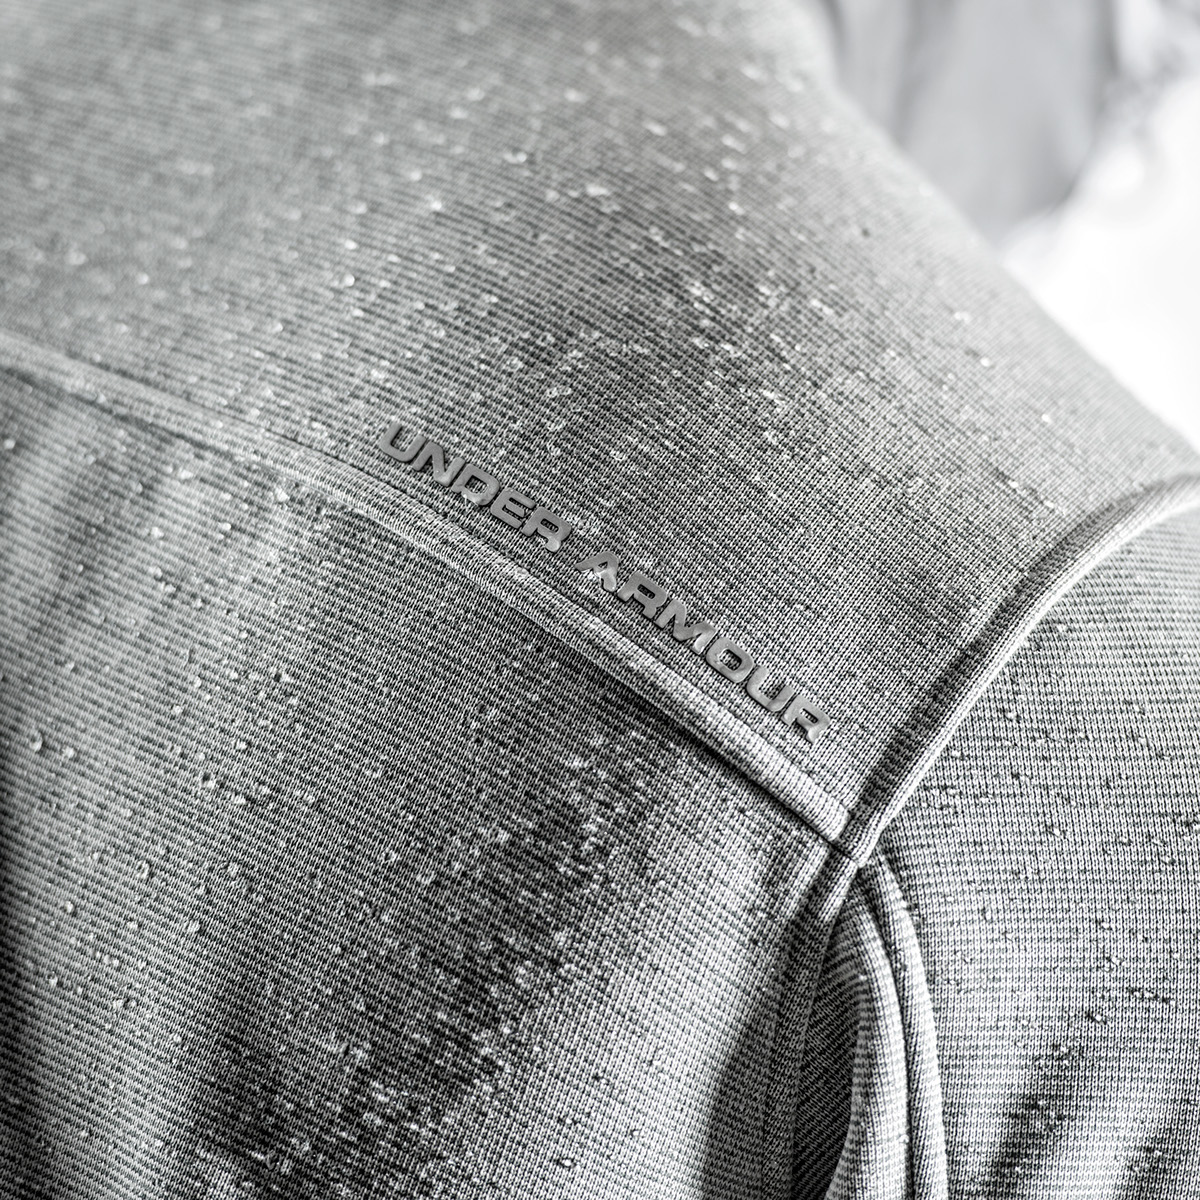 sports Under Armour waterproof weather Clothing athletics jacket hoodie